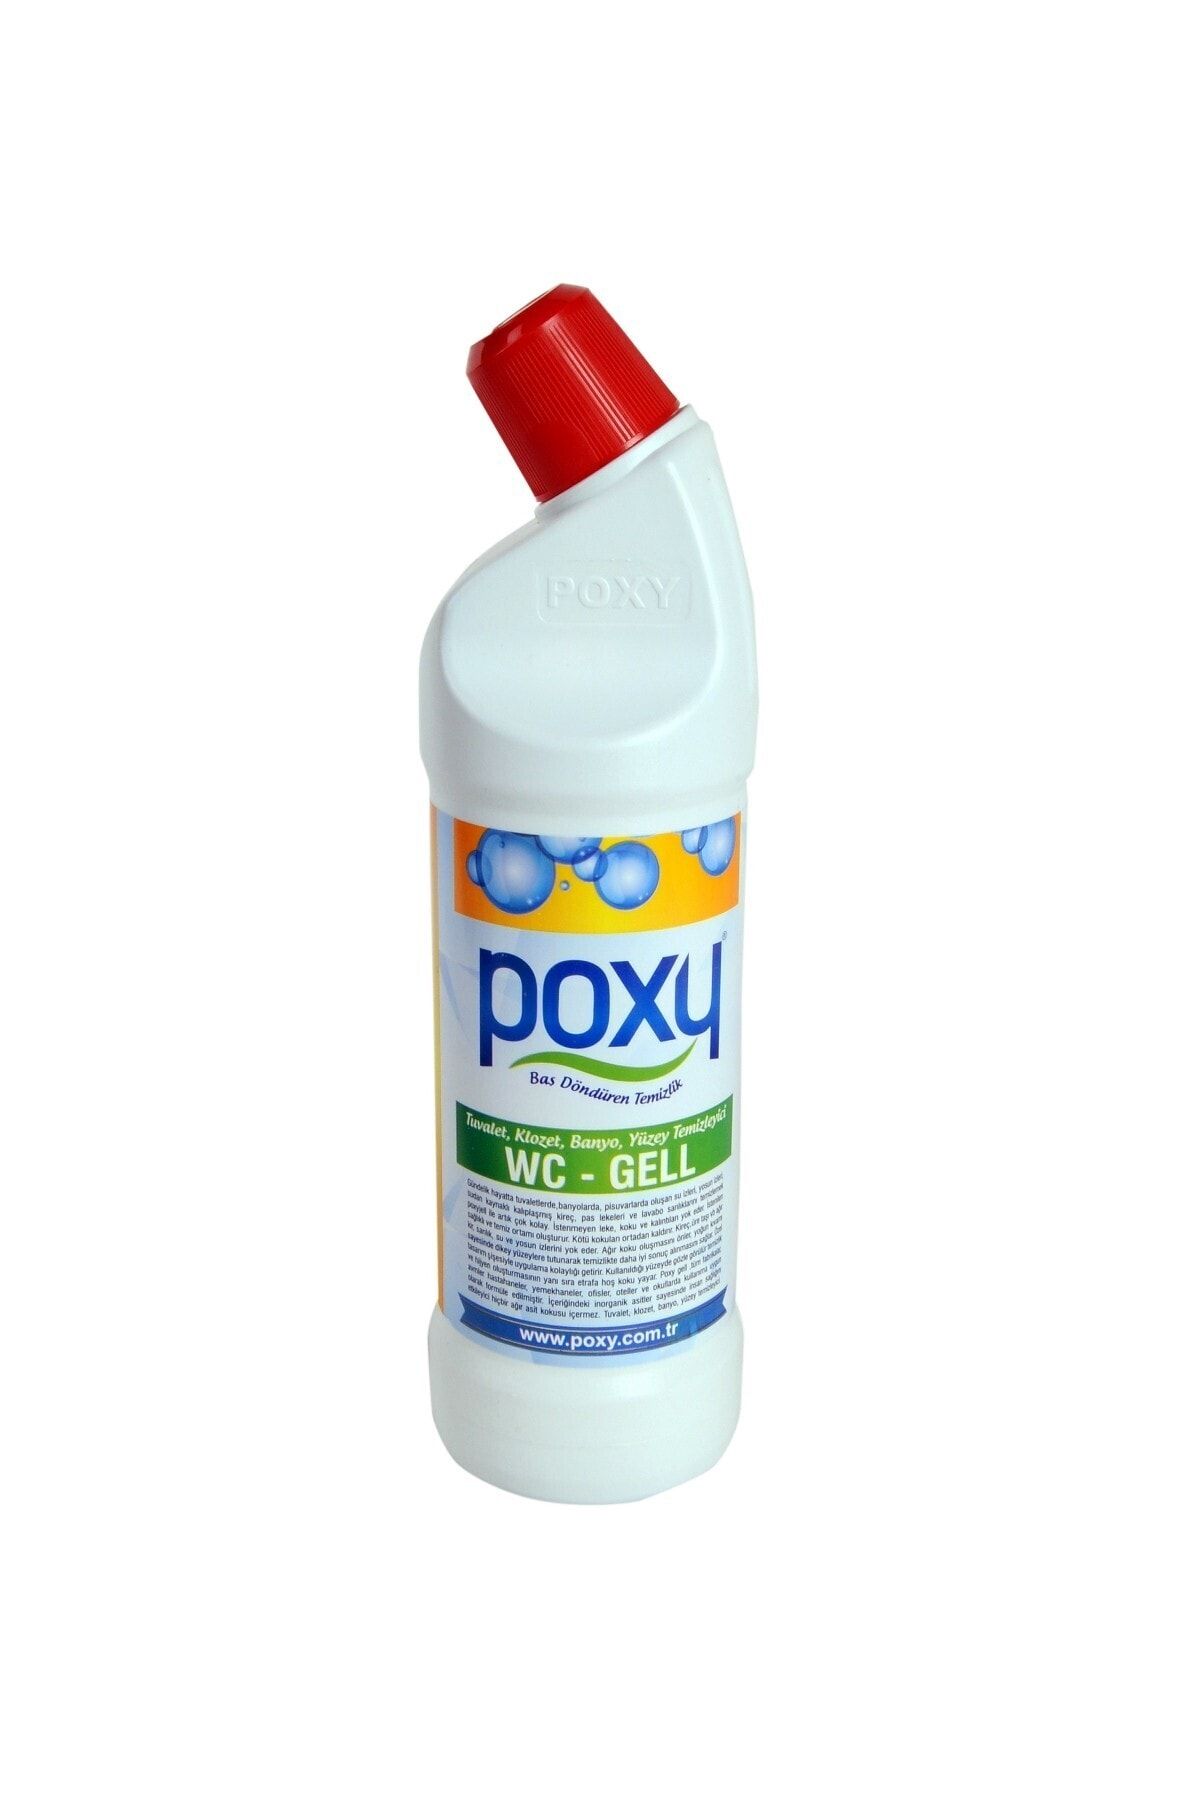 Poxy Wc-jell 1000 ml